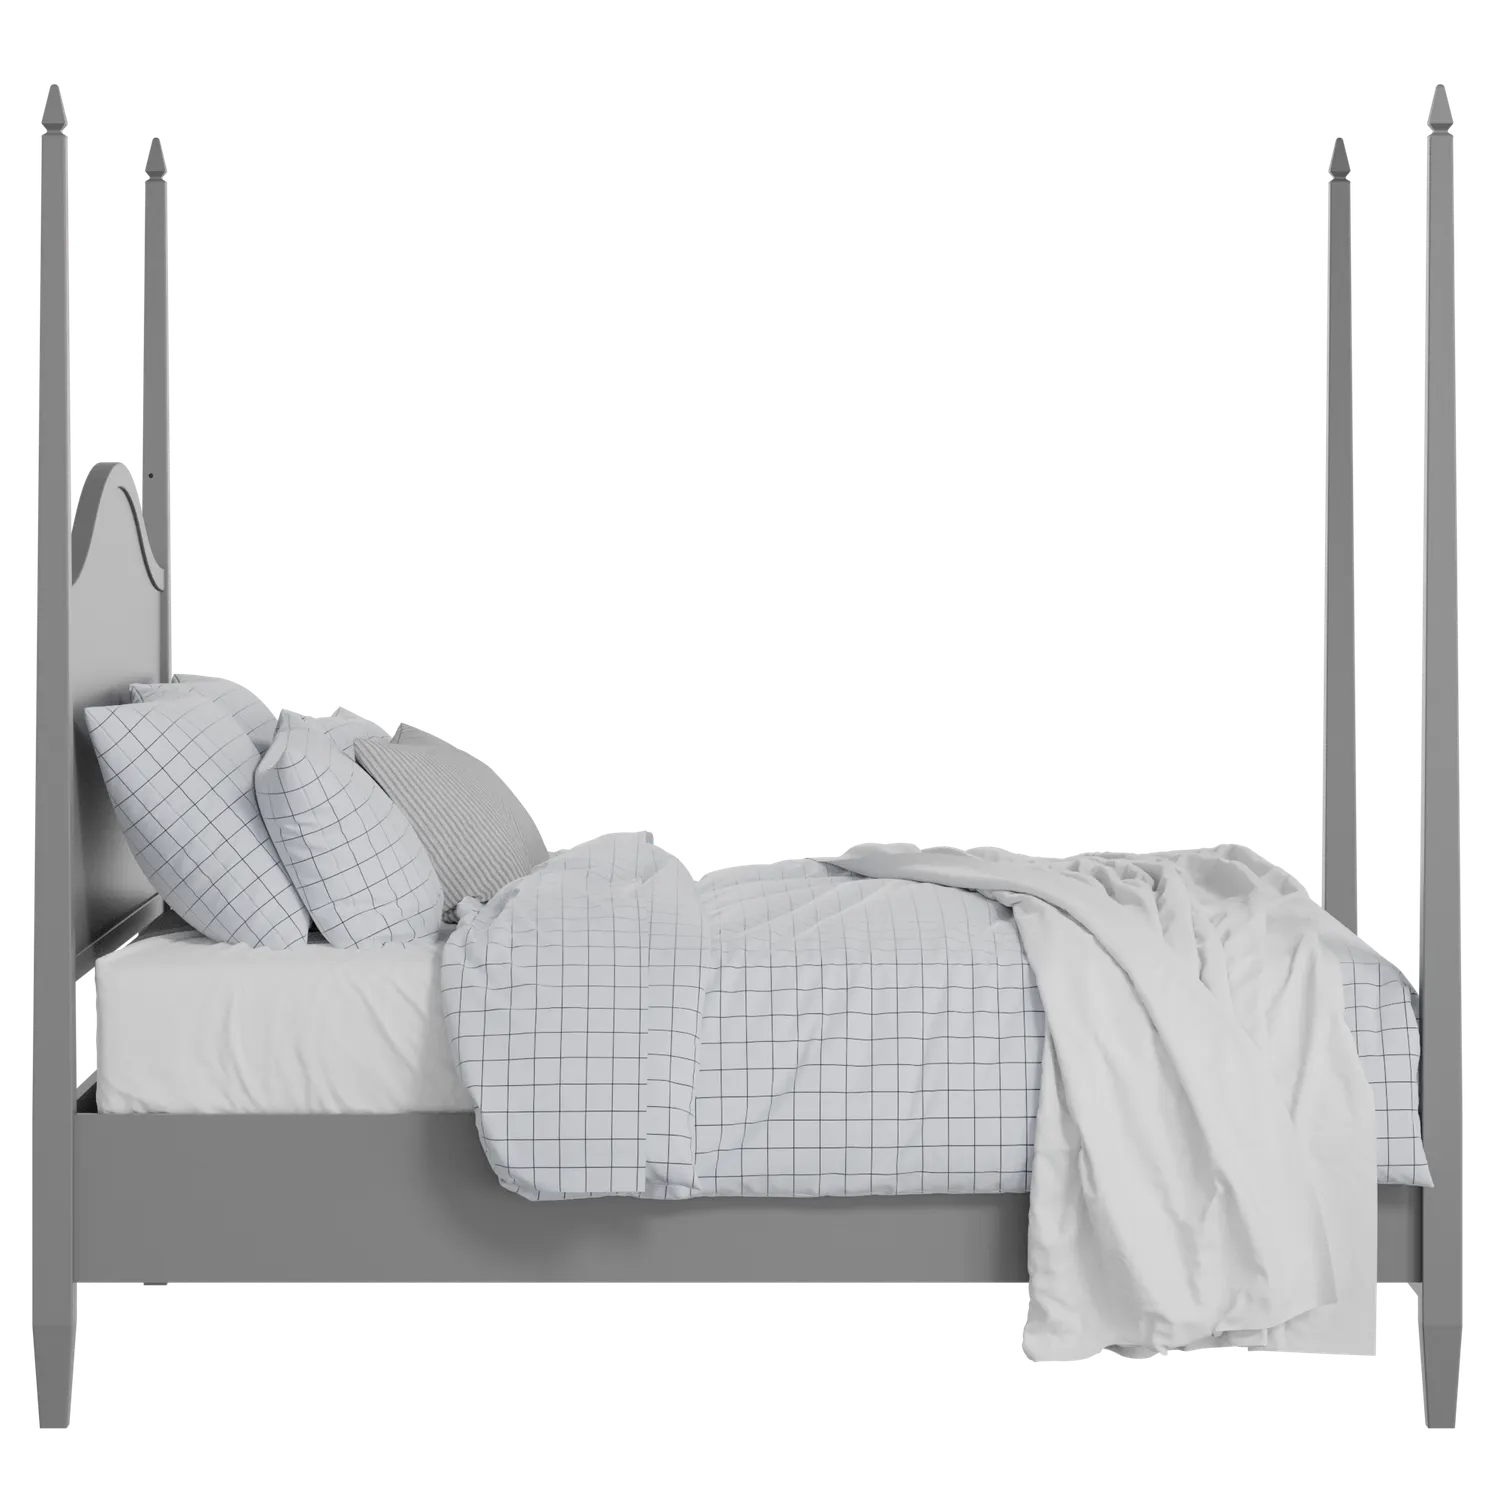 Larkin Slim painted wood bed in grey with Juno mattress